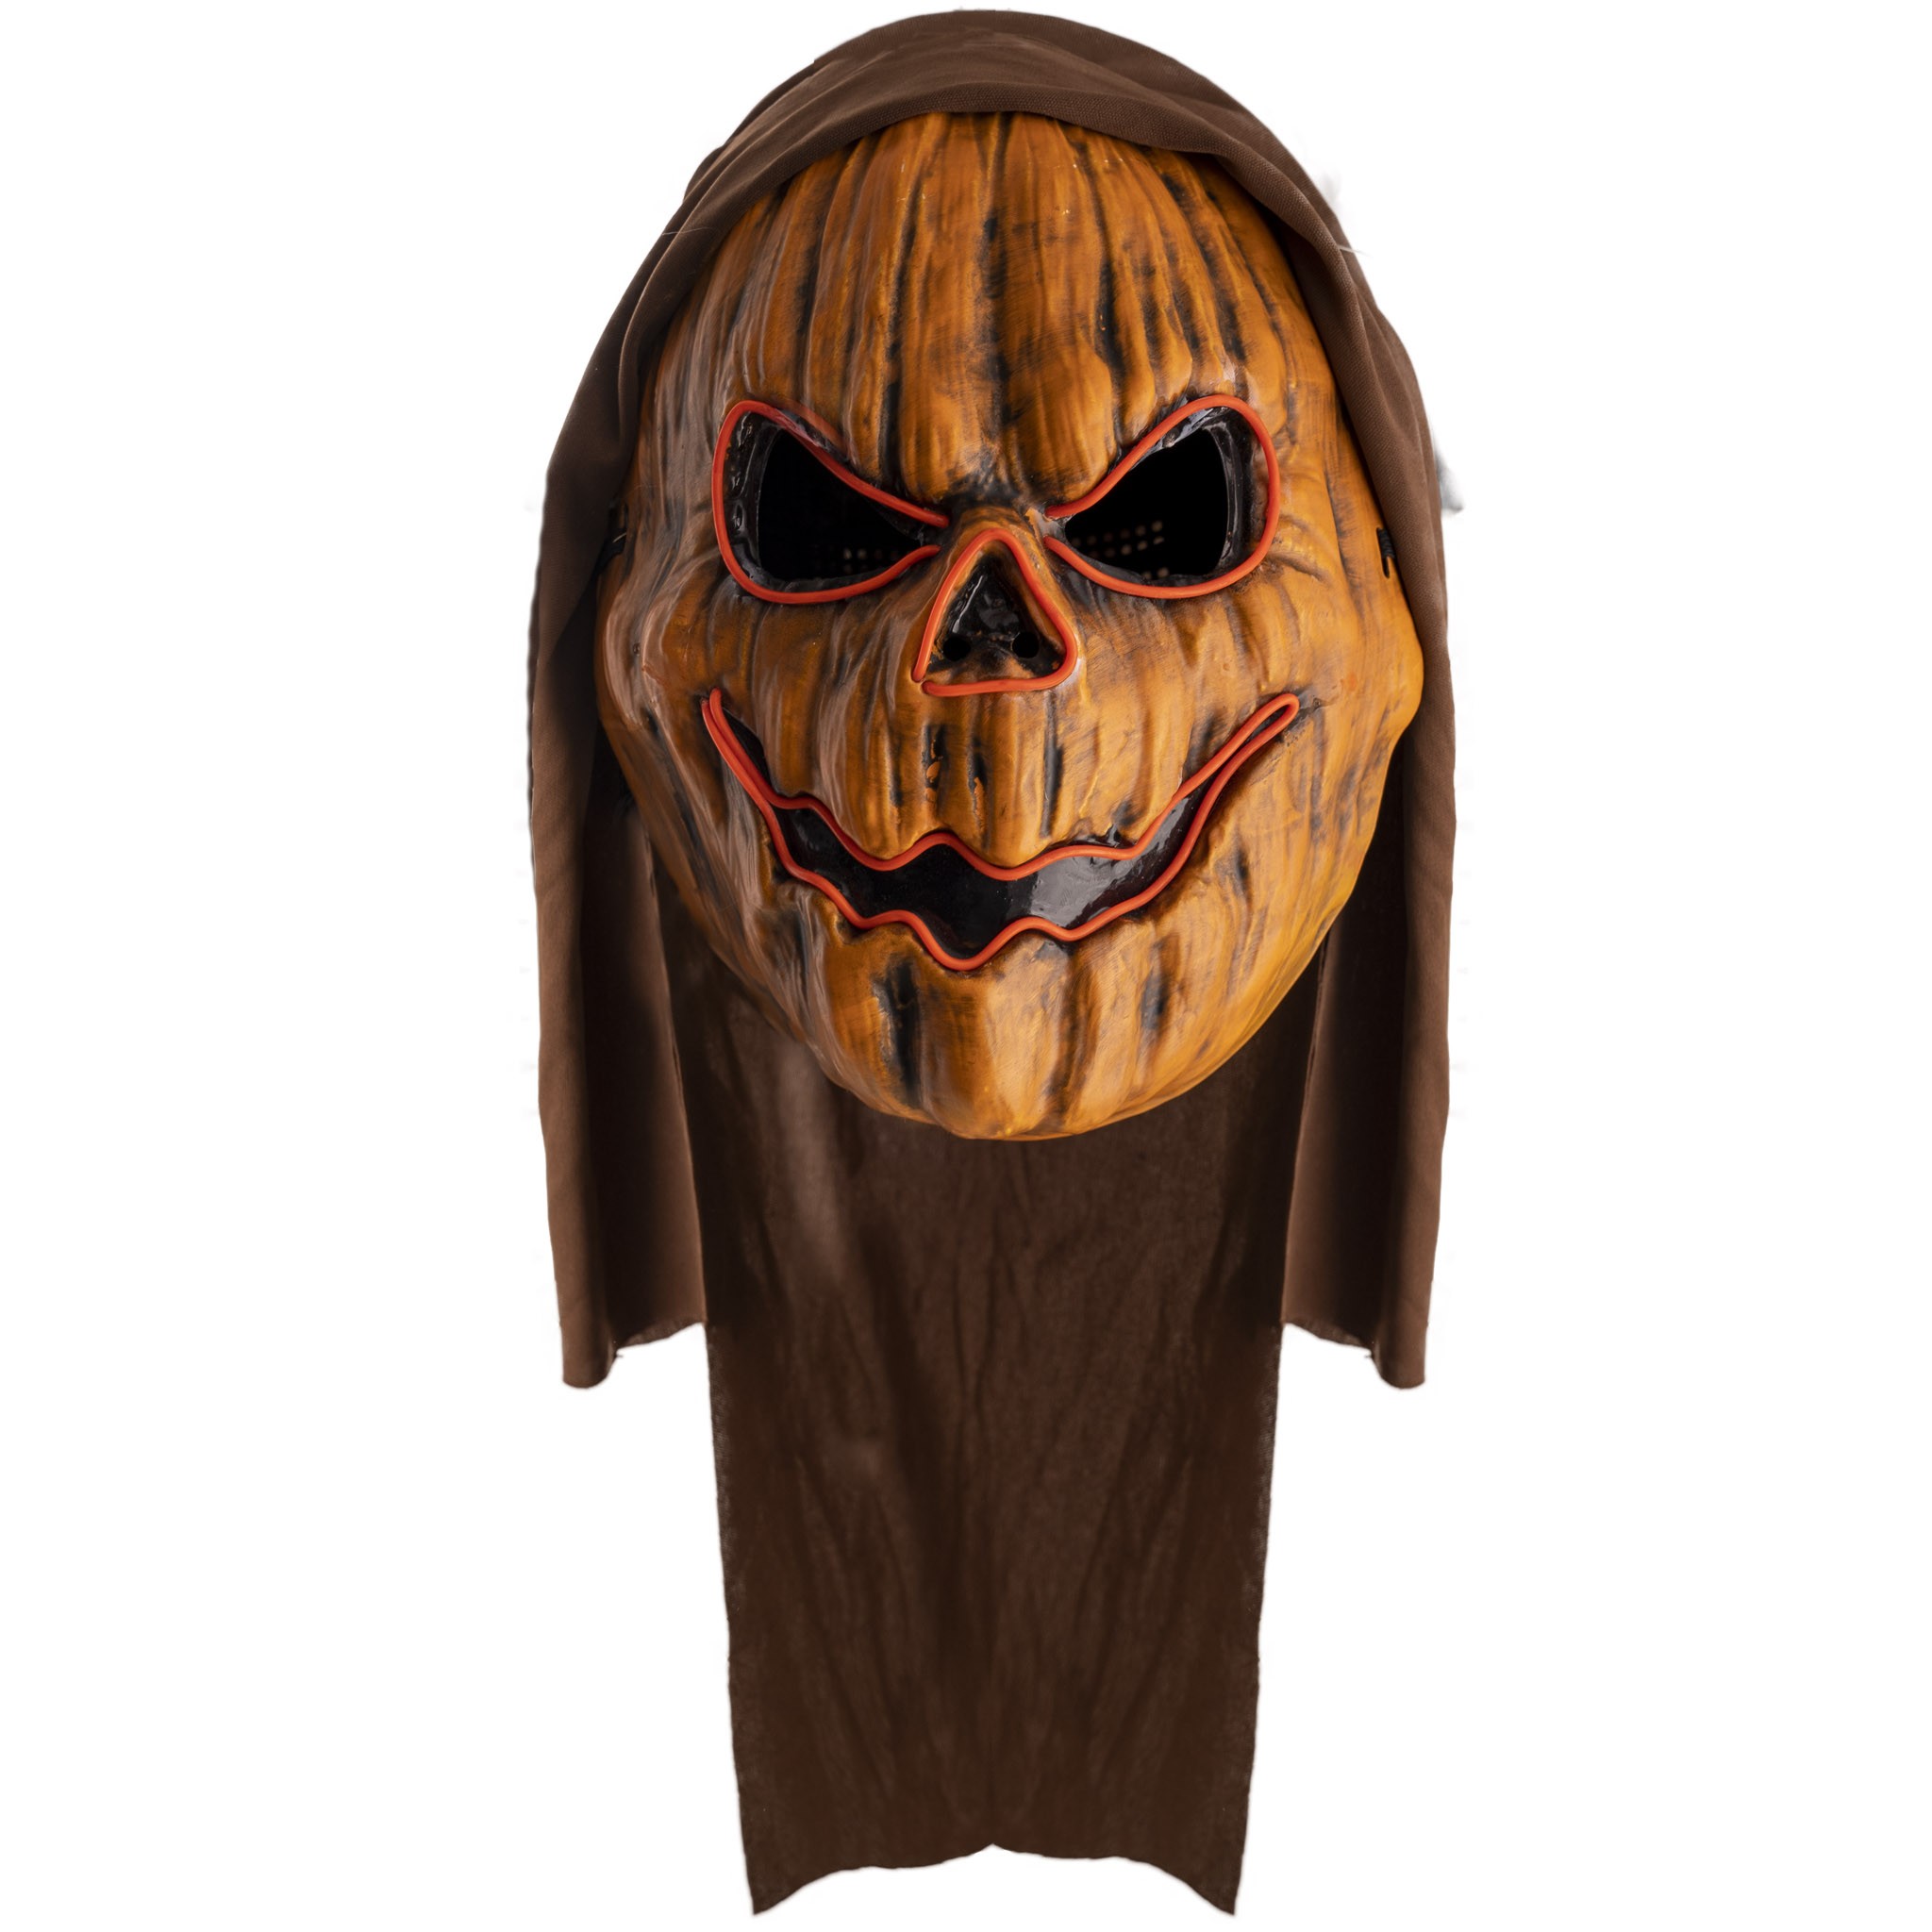 Afleiden hersenen Beknopt Pompoen masker Halloween met kap en licht| Jokershop.be - Enge maskers